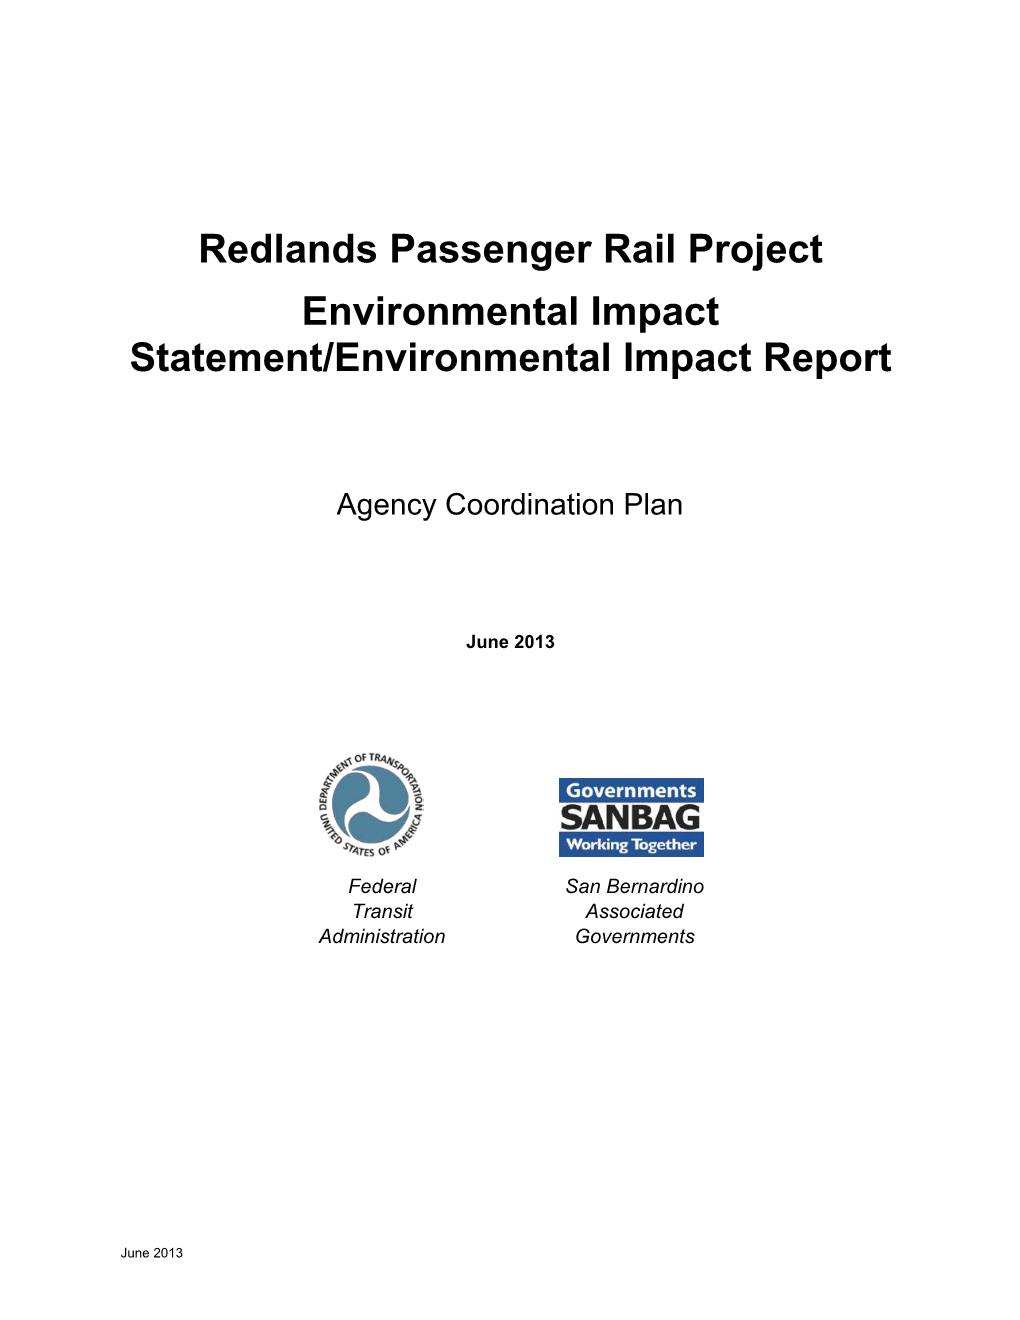 Redlands Passenger Rail Project Environmental Impact Statement/Environmental Impact Report